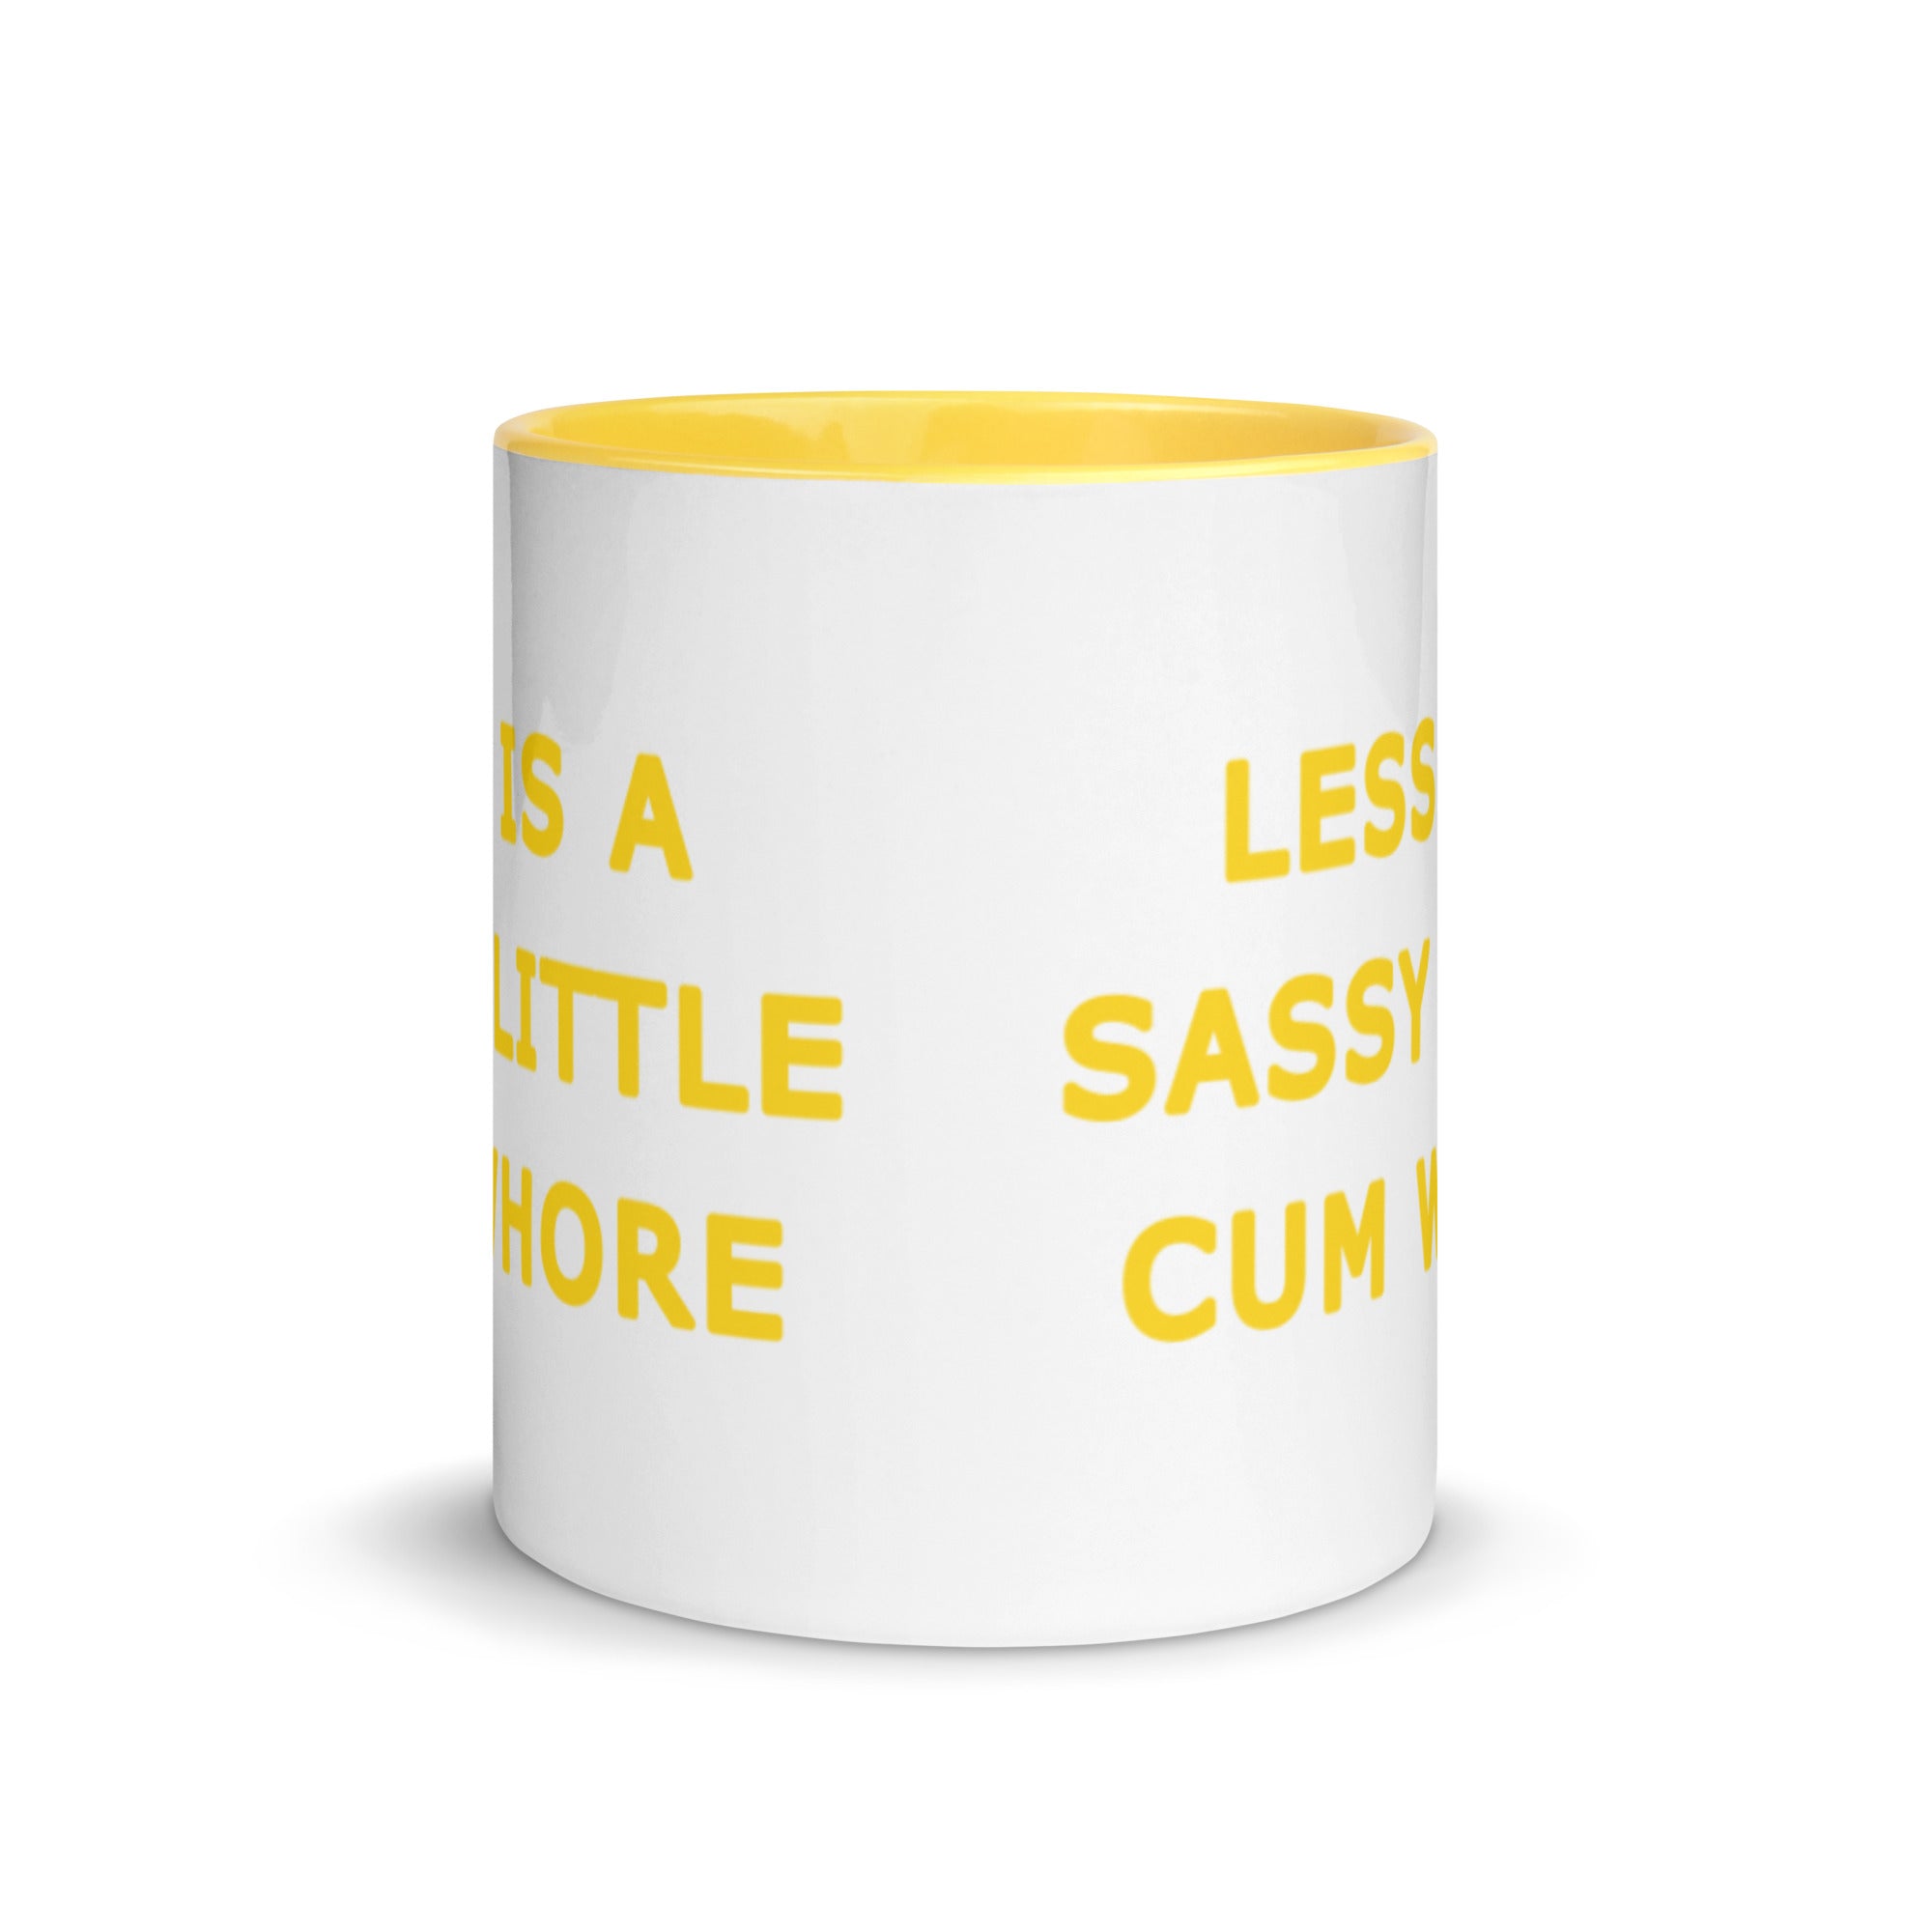 Less is a Sassy Little Cum Whore Blue, Orange, Pink, Black Or Yellow Mug